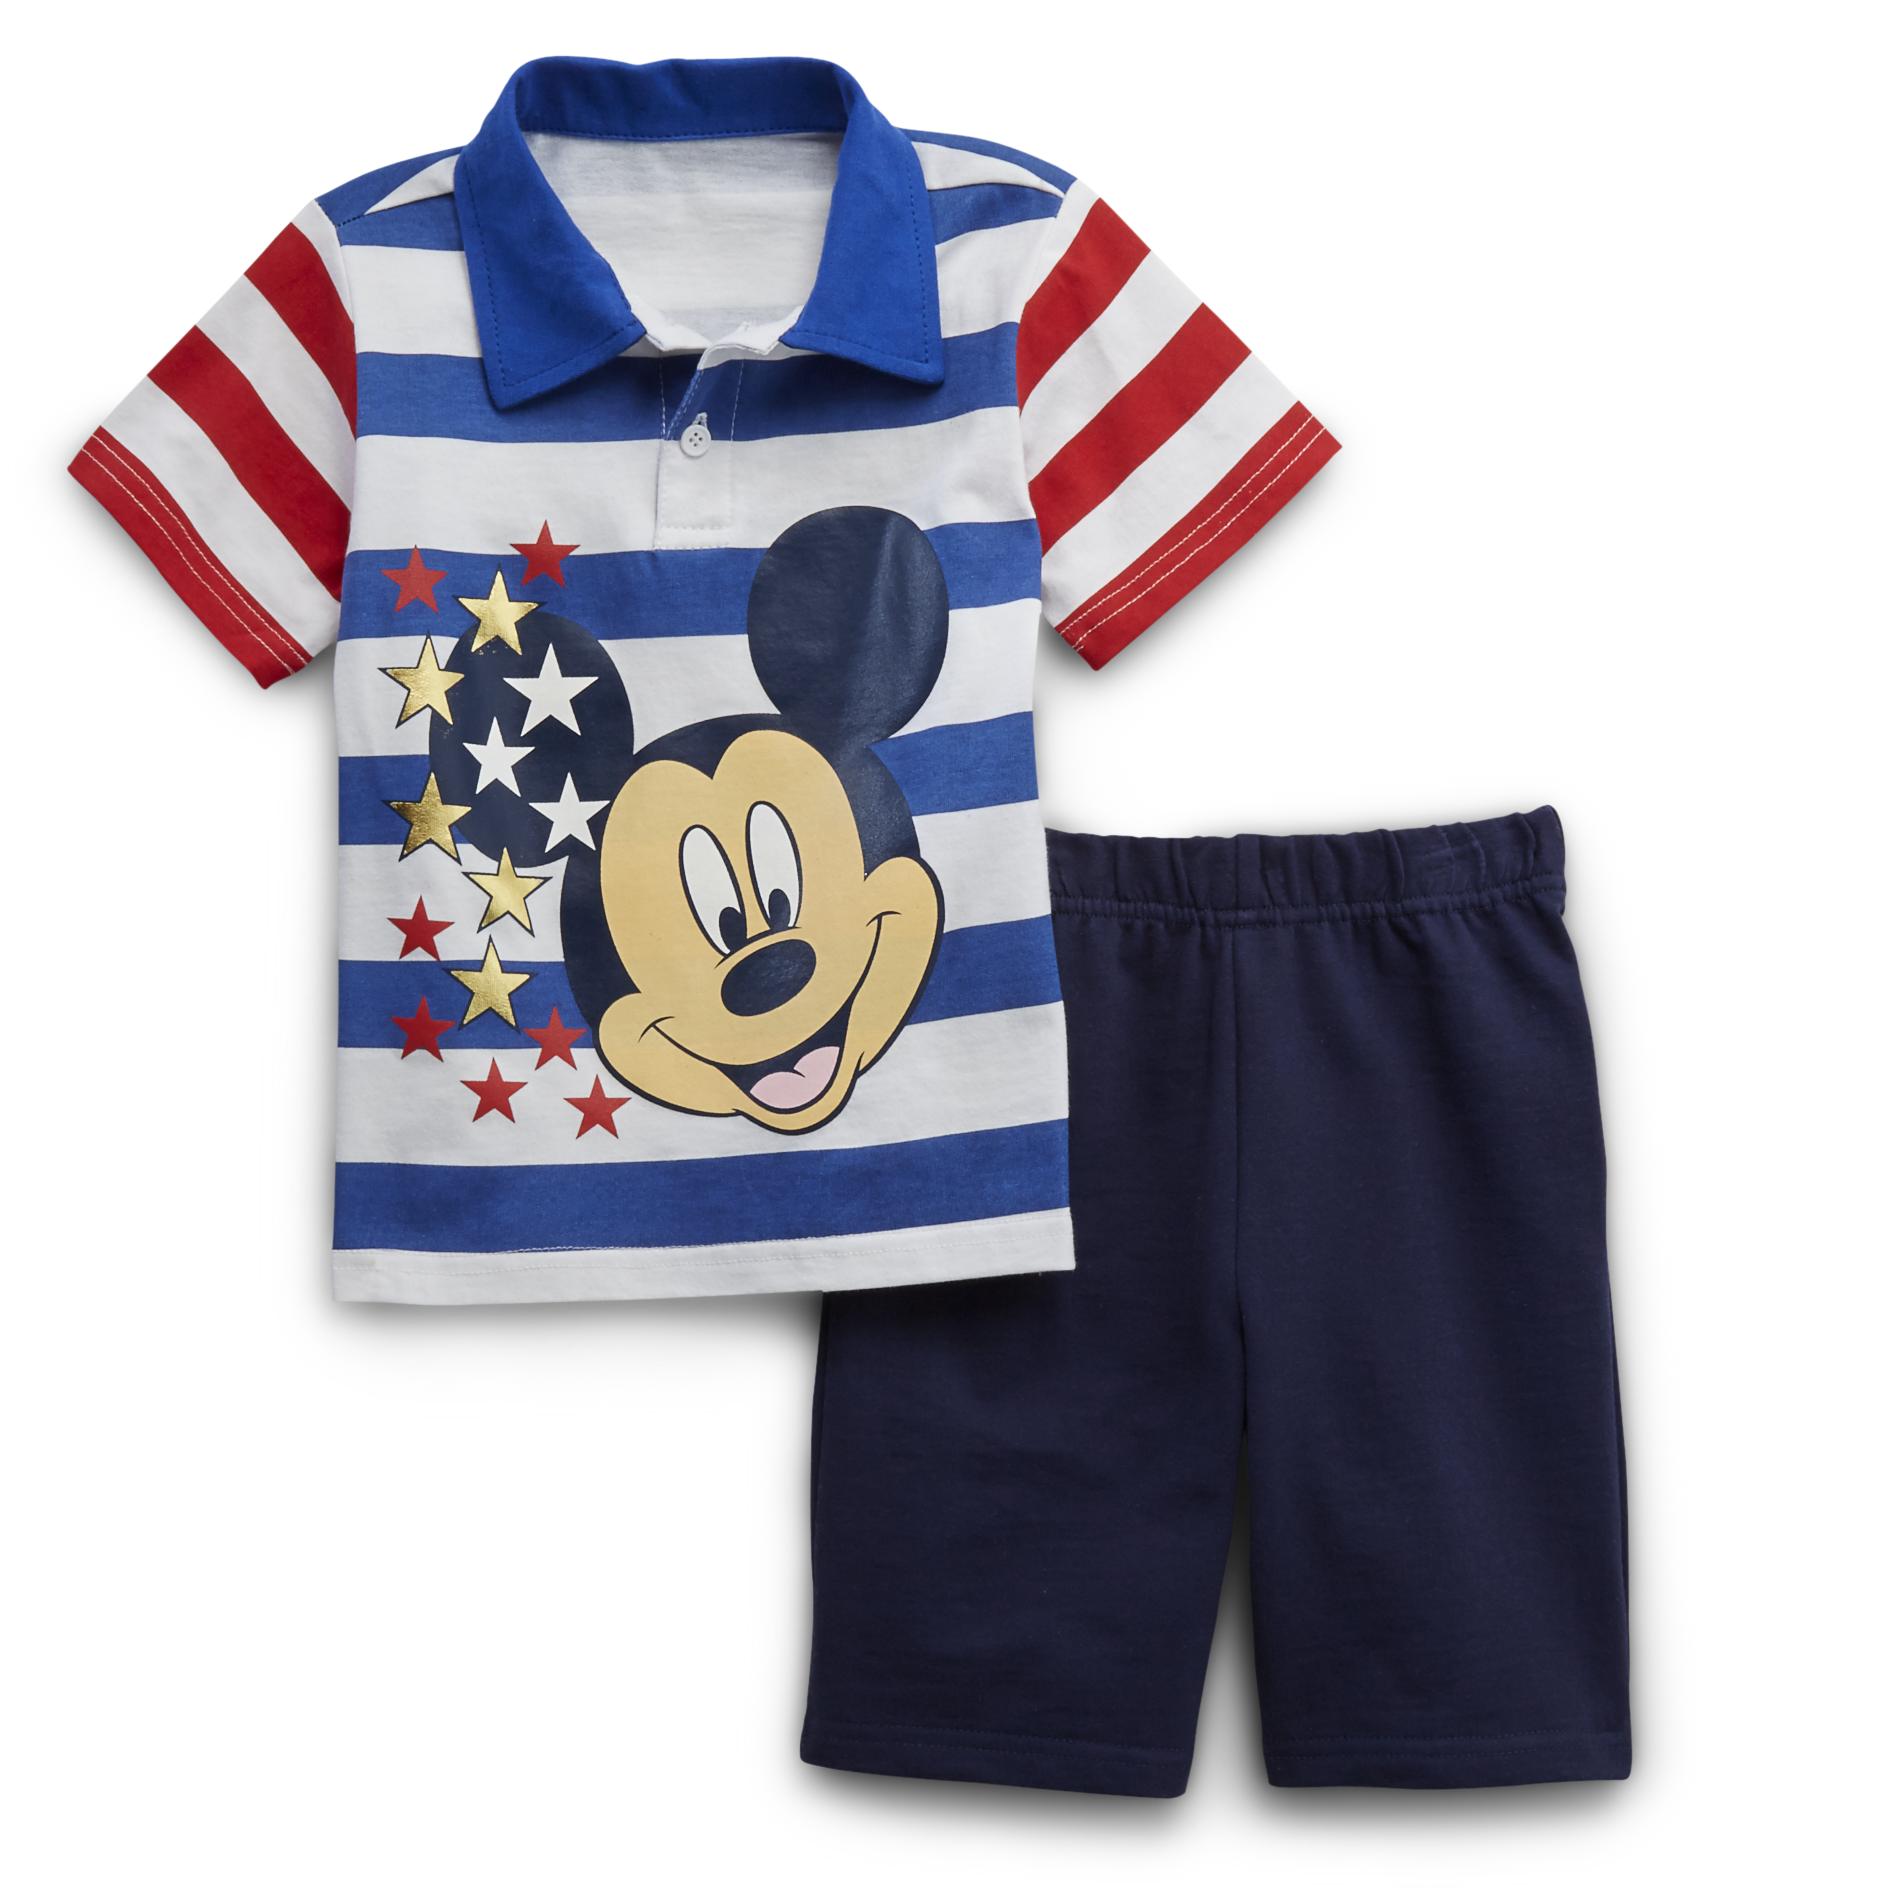 Disney Toddler Boy's Shirt & Shorts - Mickey Mouse